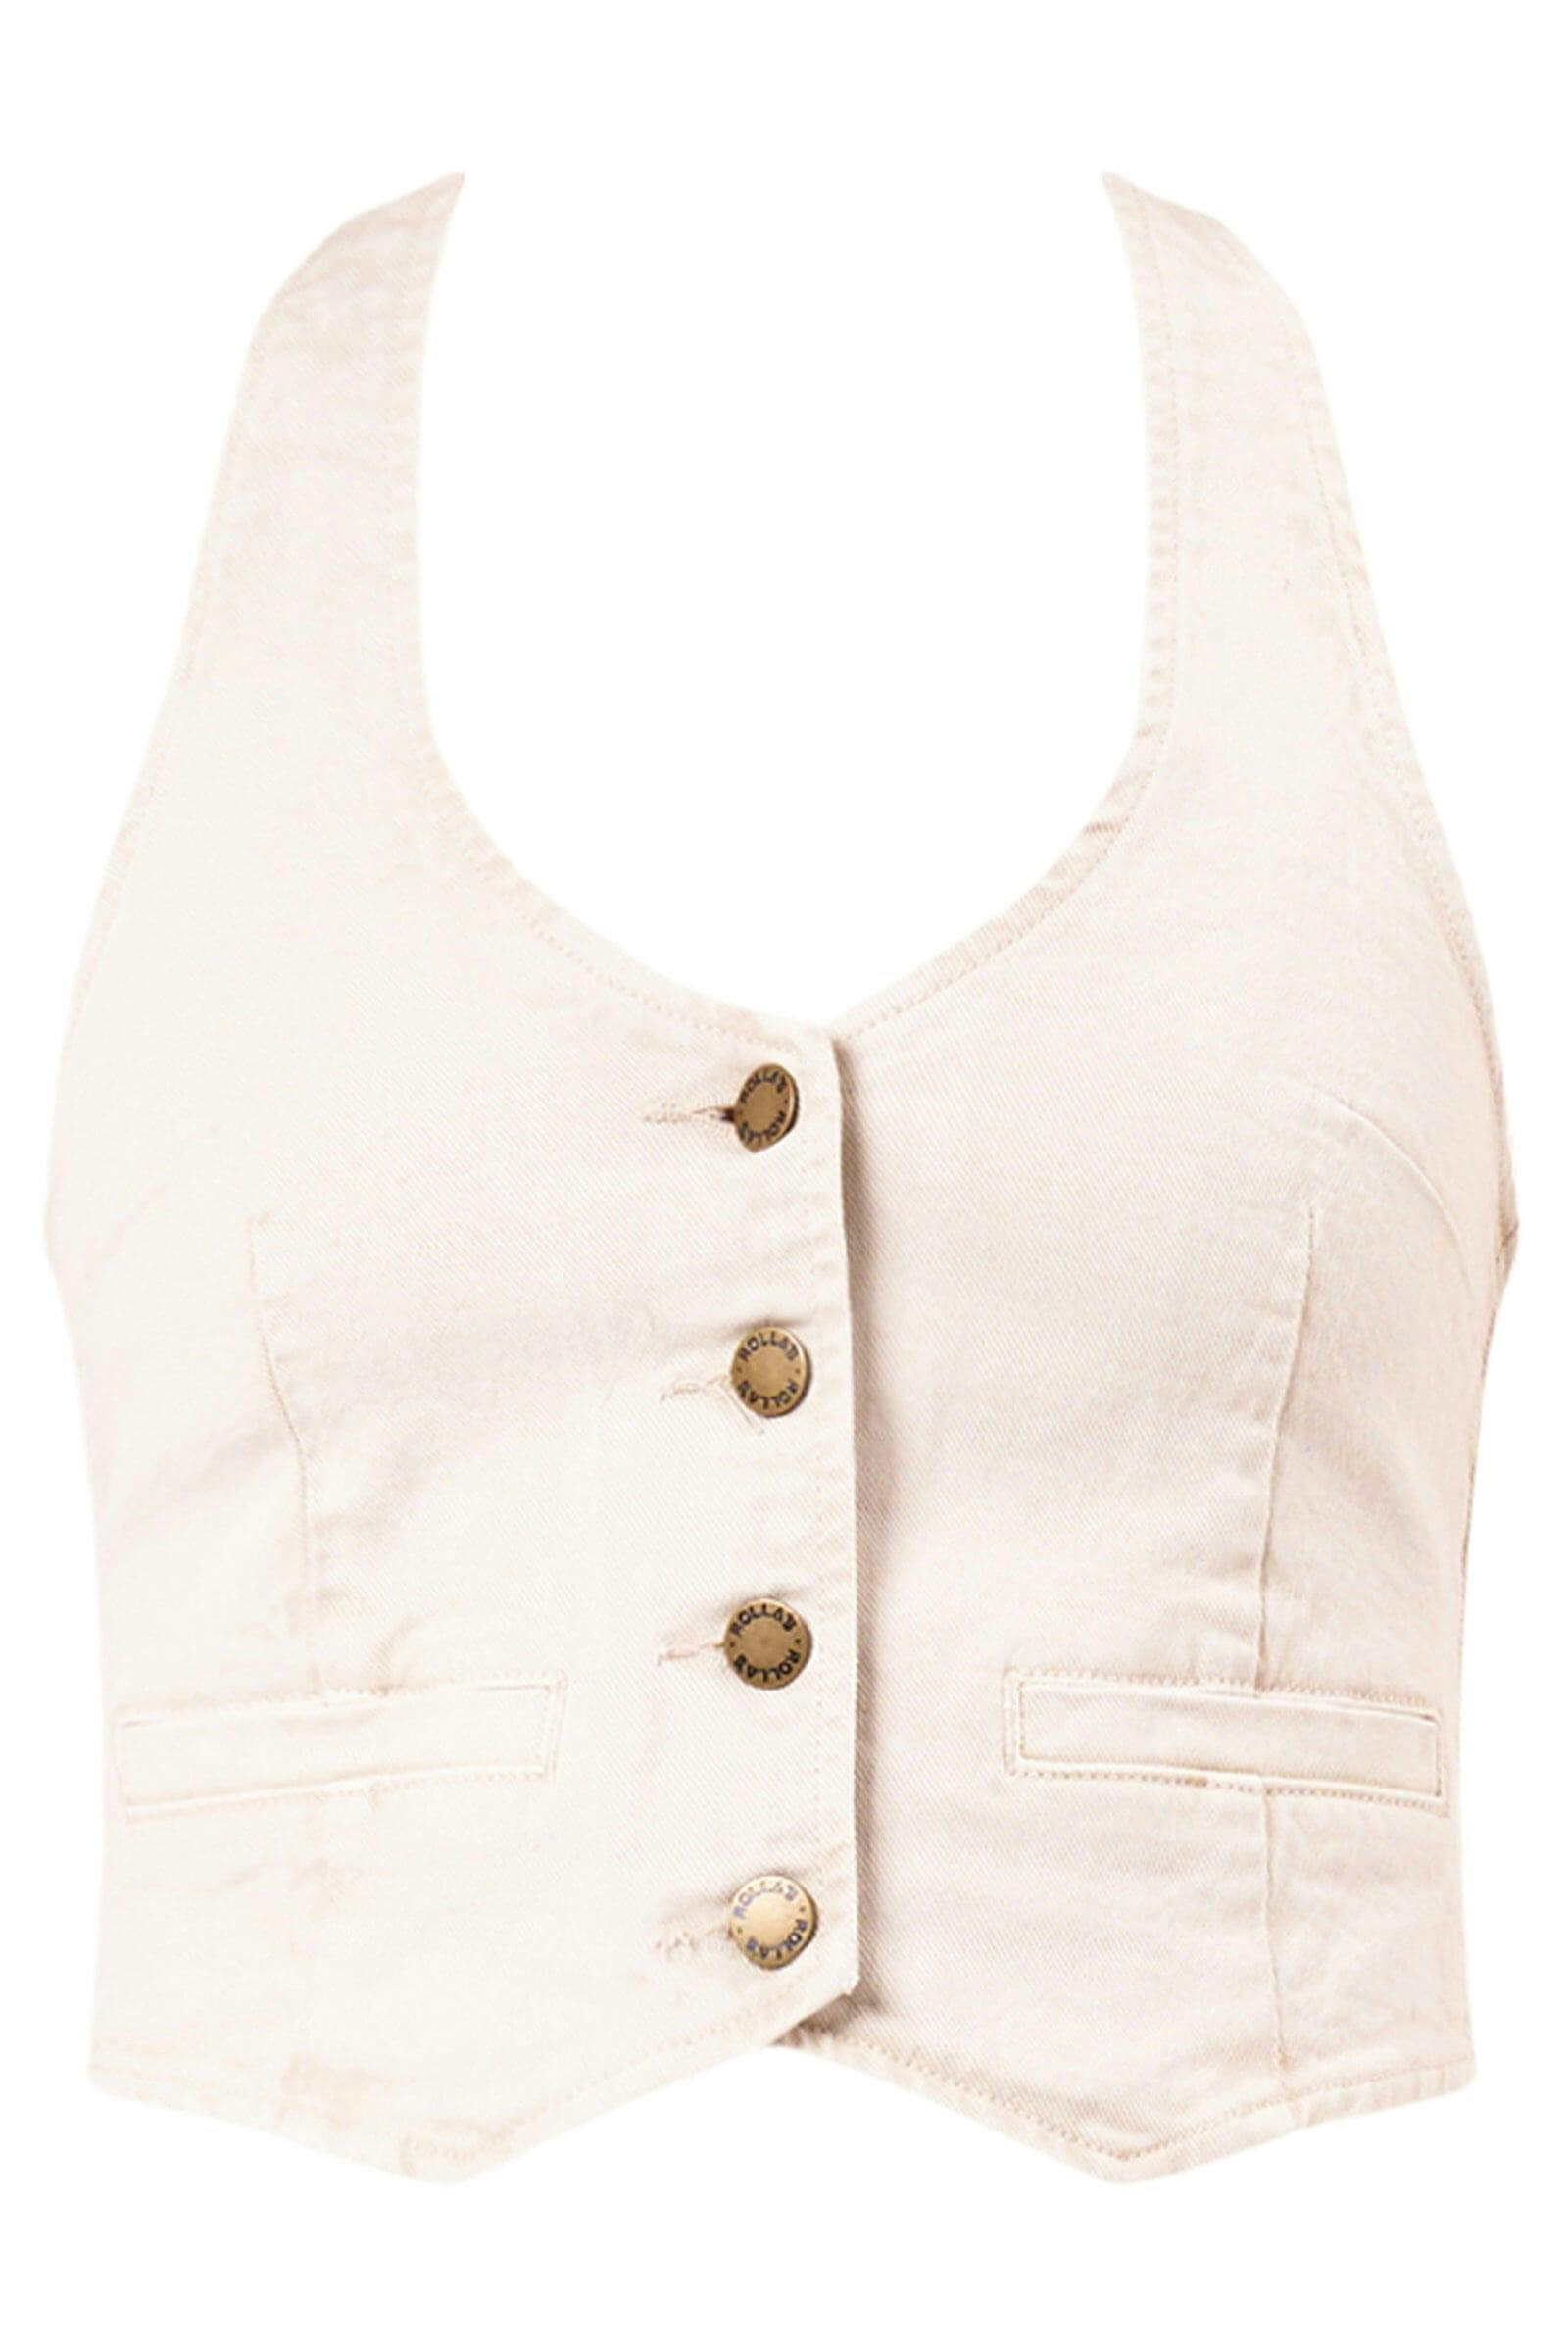 Rolla's halter vest in off white